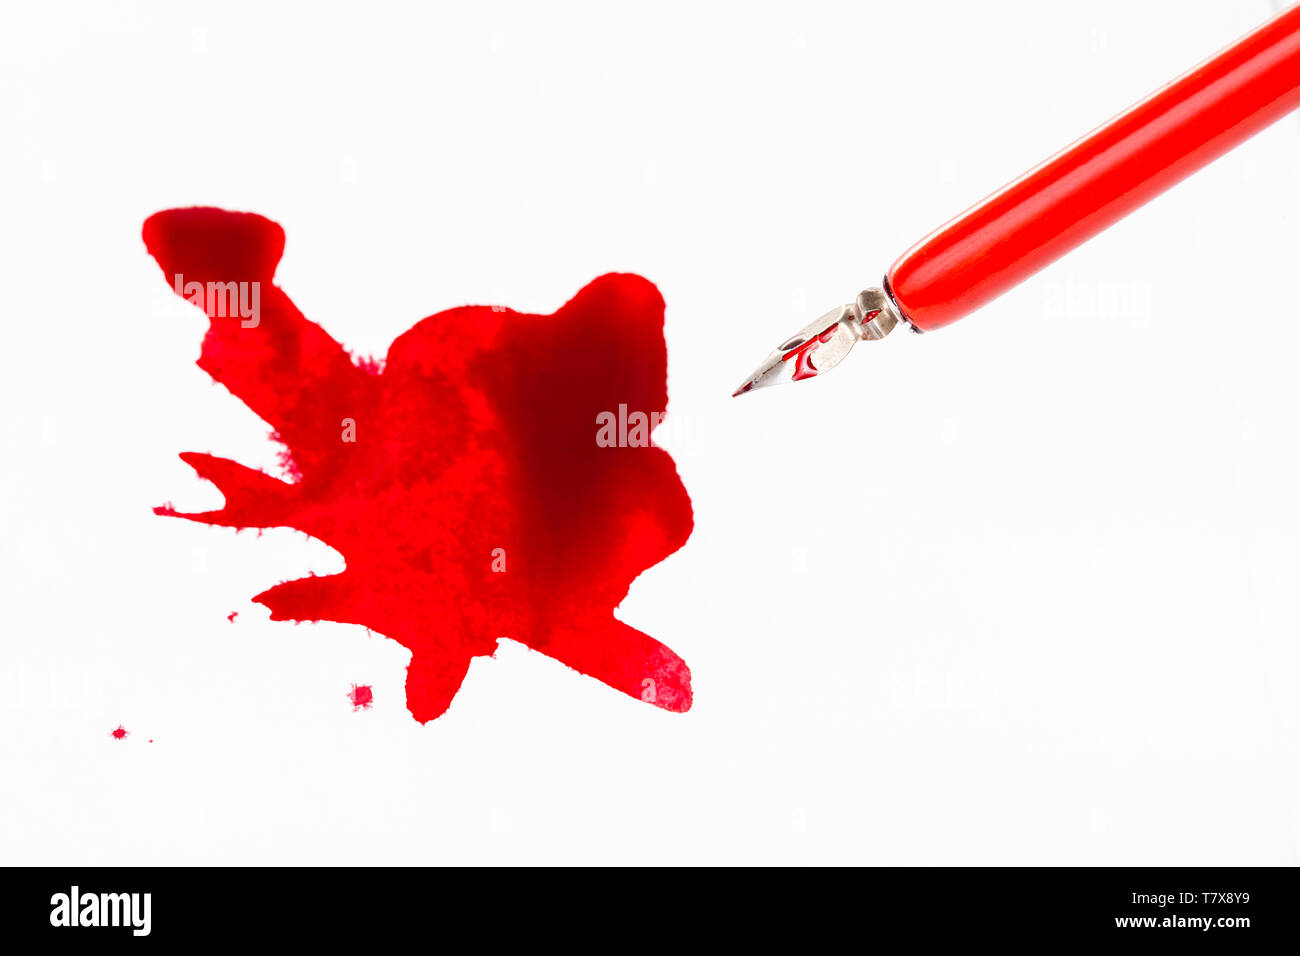 Vista superior del plumín rojo sobre rojo mancha de tinta de bolígrafo  sobre papel blanco Fotografía de stock - Alamy